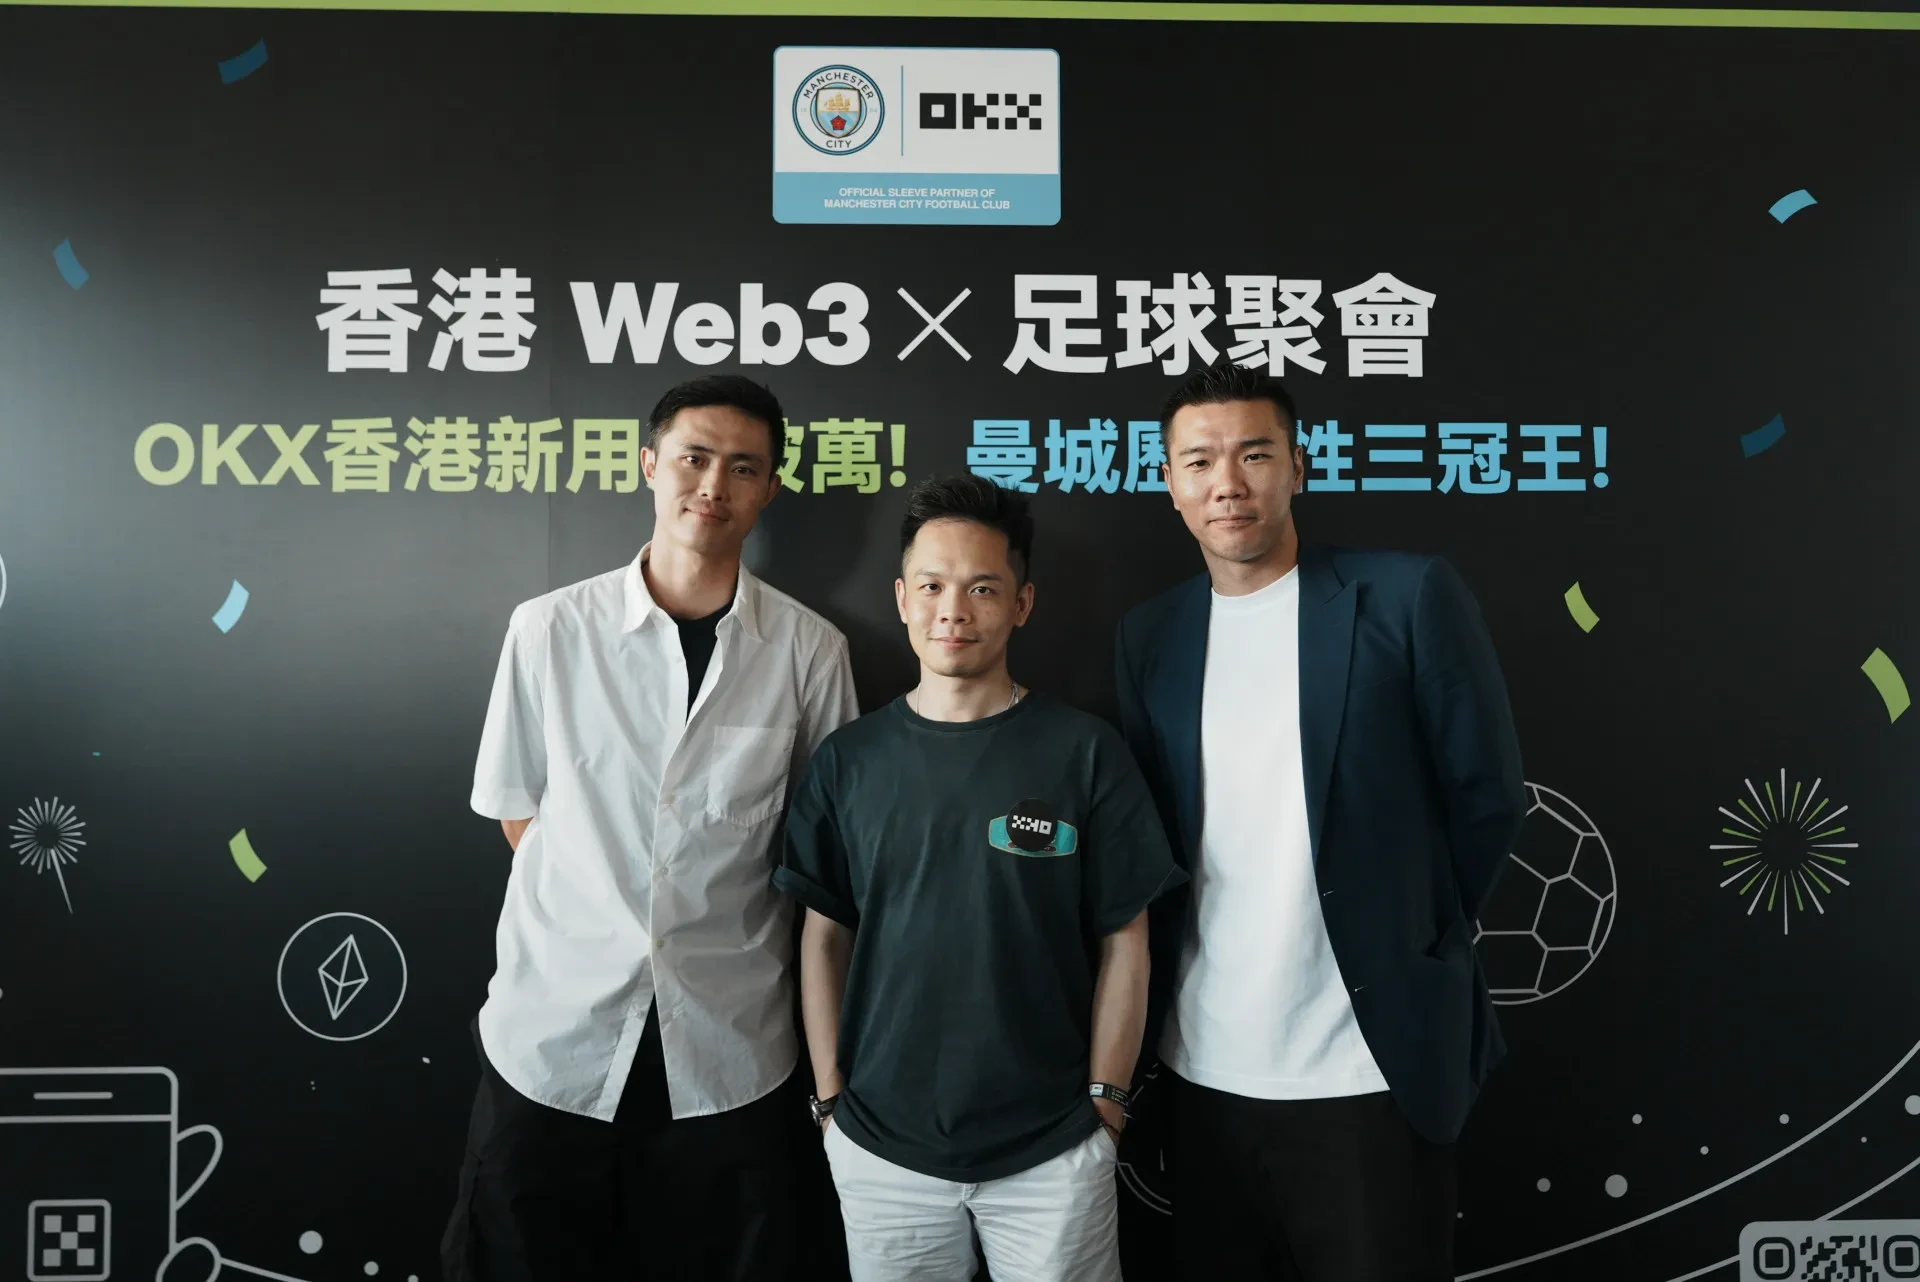 From left, Former Hong Kong Football Team Captain Wai Ho Chan, OKX Global Chief Commercial Officer Lennix Lai, and Hong Kong Football Team's Top Scorer Siu Ki Chan